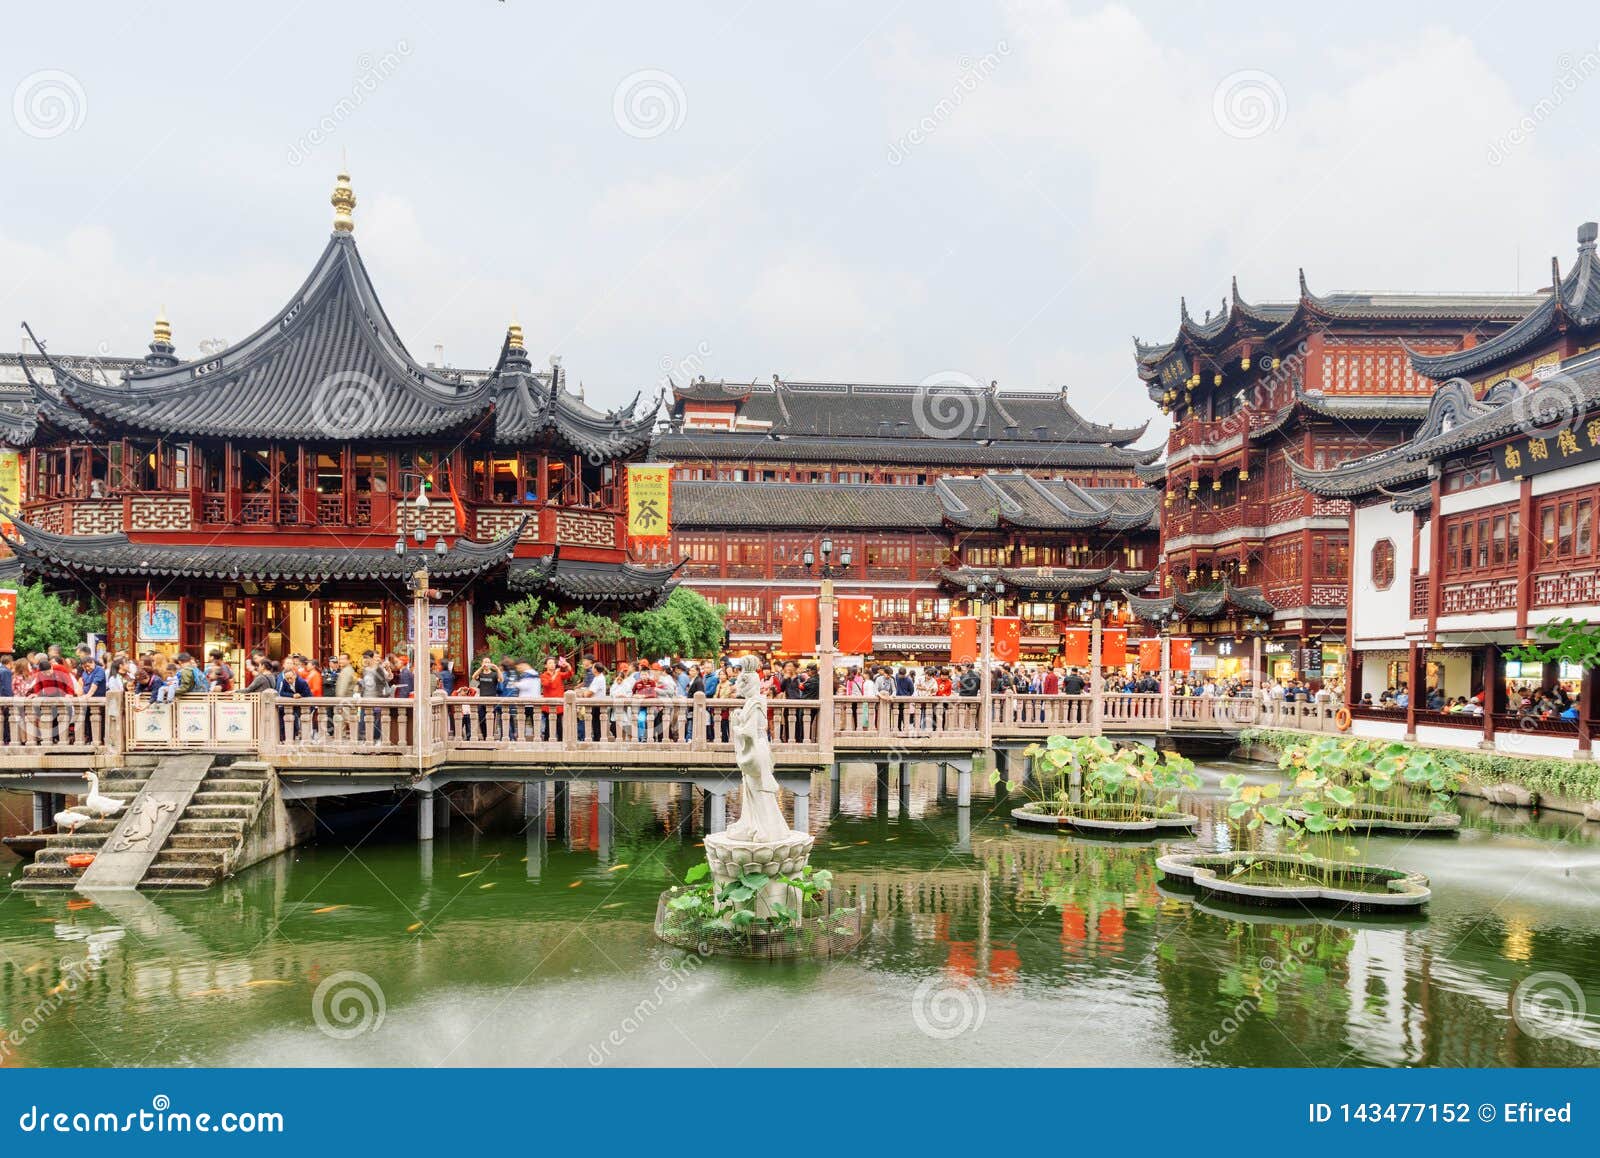 Tourists On The Jiuqu Bridge At Yuyuan Garden Shanghai China Editorial Photography Image Of Historic Beautiful